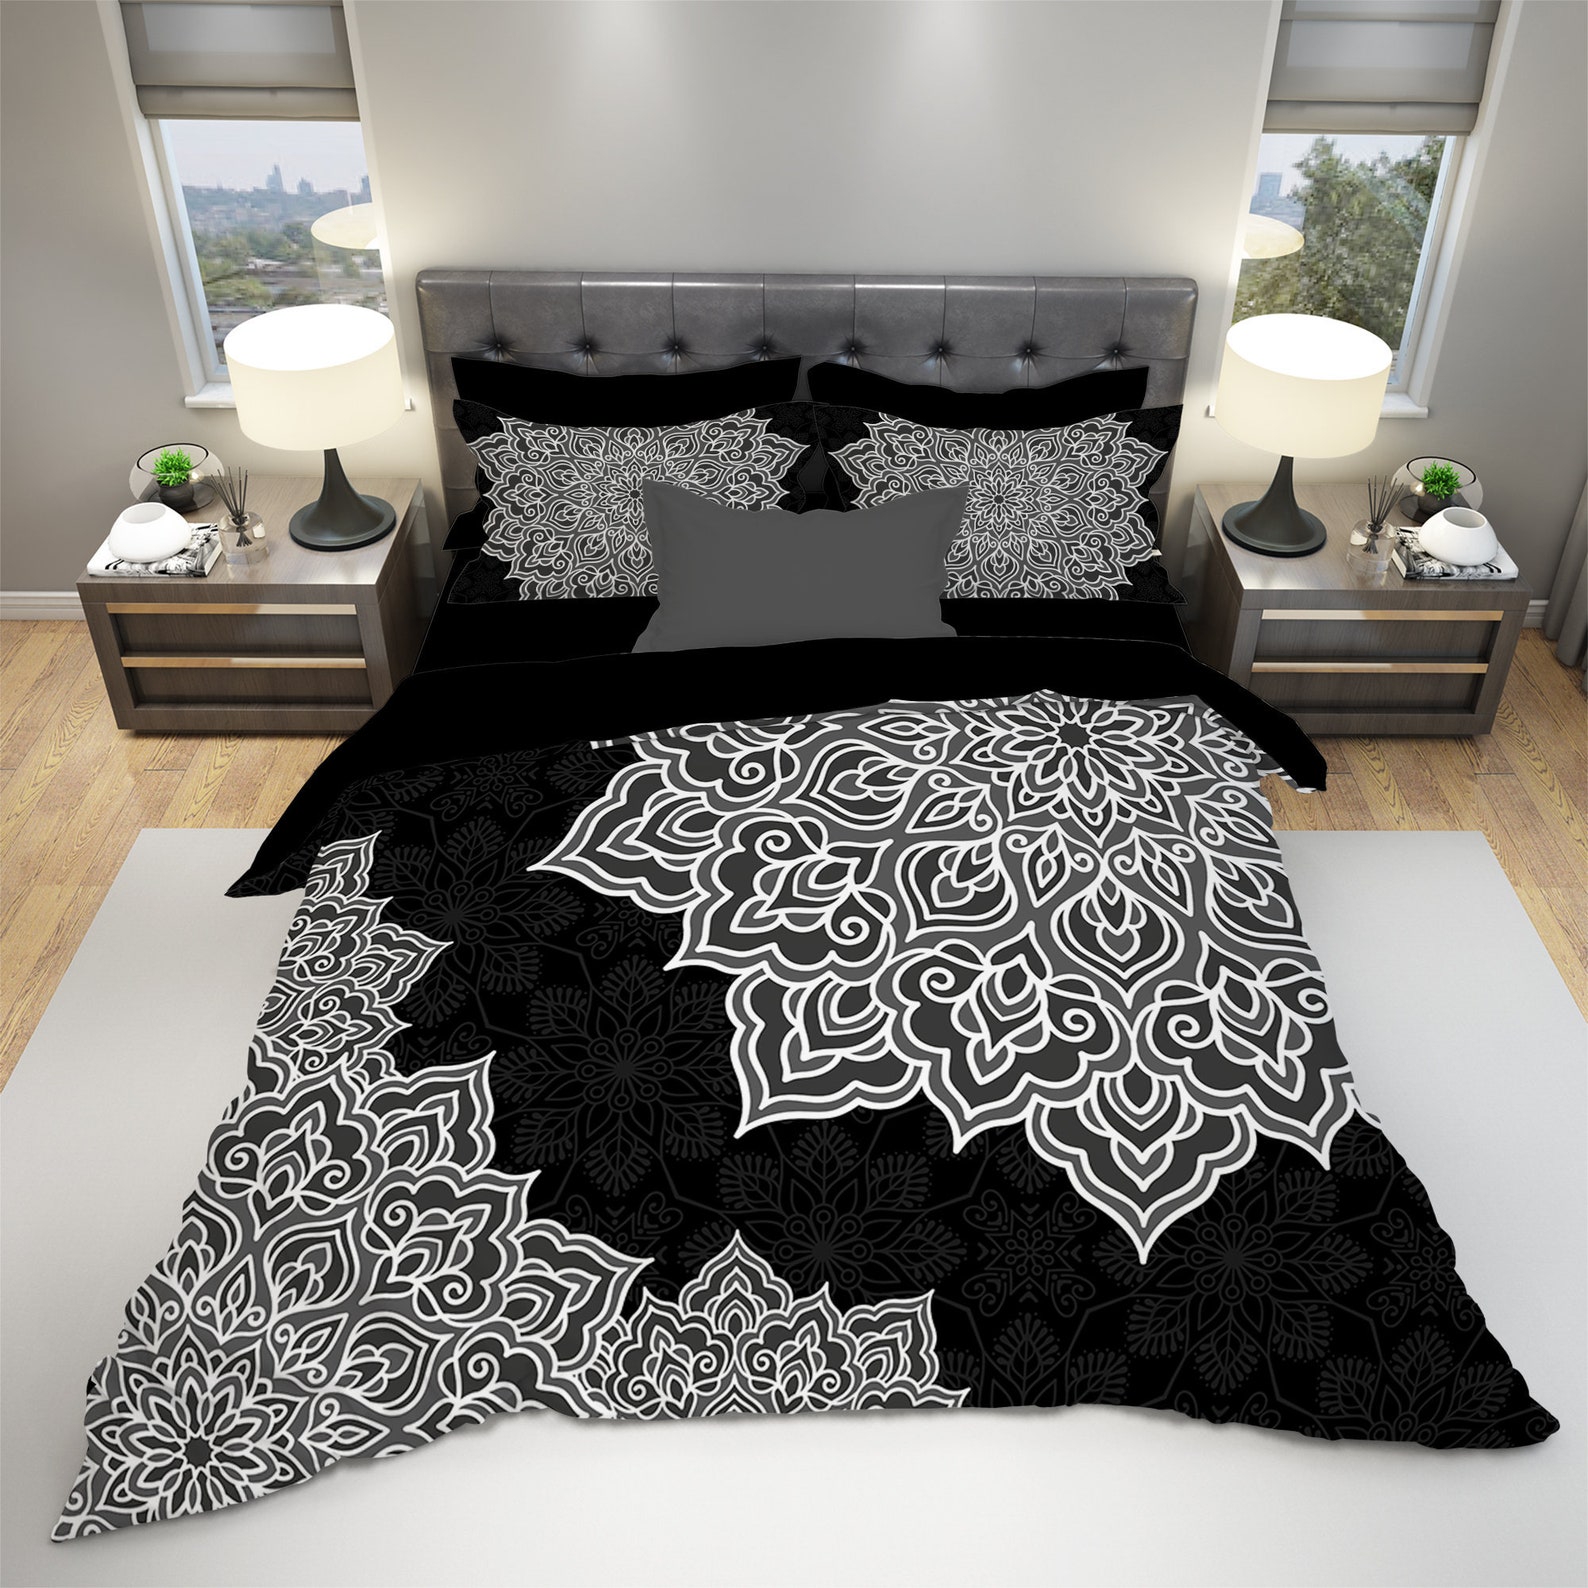 Mandala Black And White Boho Cotton Bed Sheets Spread Comforter Duvet Cover Bedding Sets